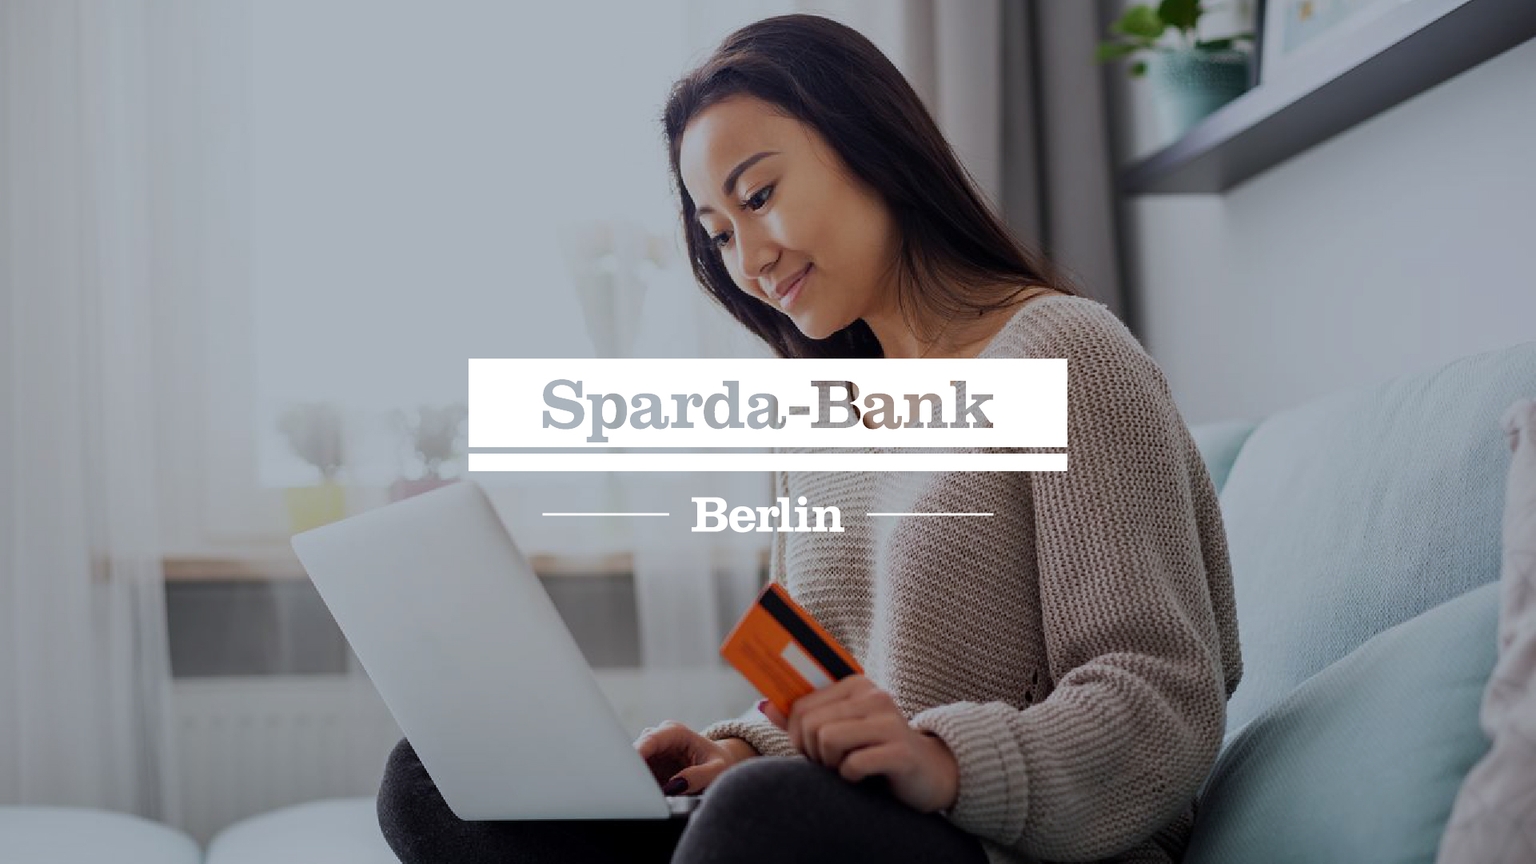 Sparda bank Berlin image